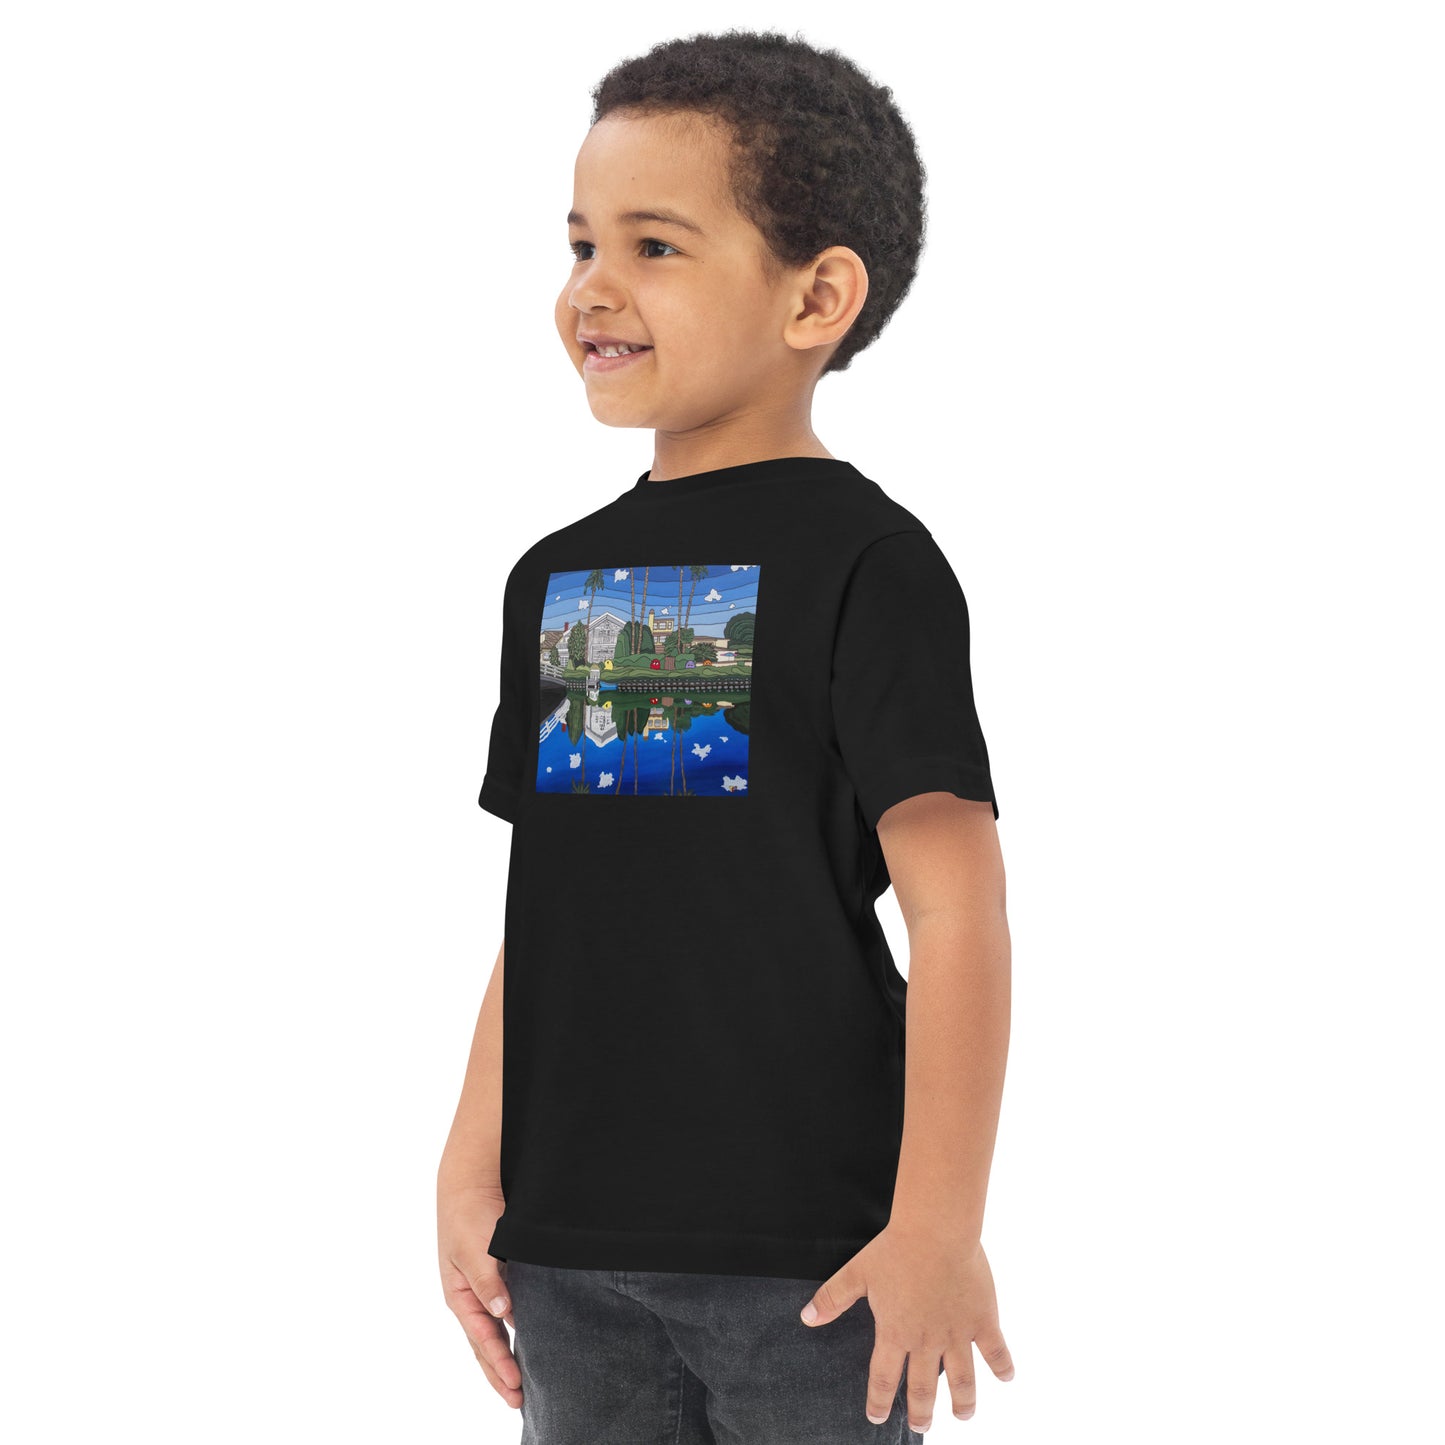 Venice Canals 2 - Toddler jersey t-shirt